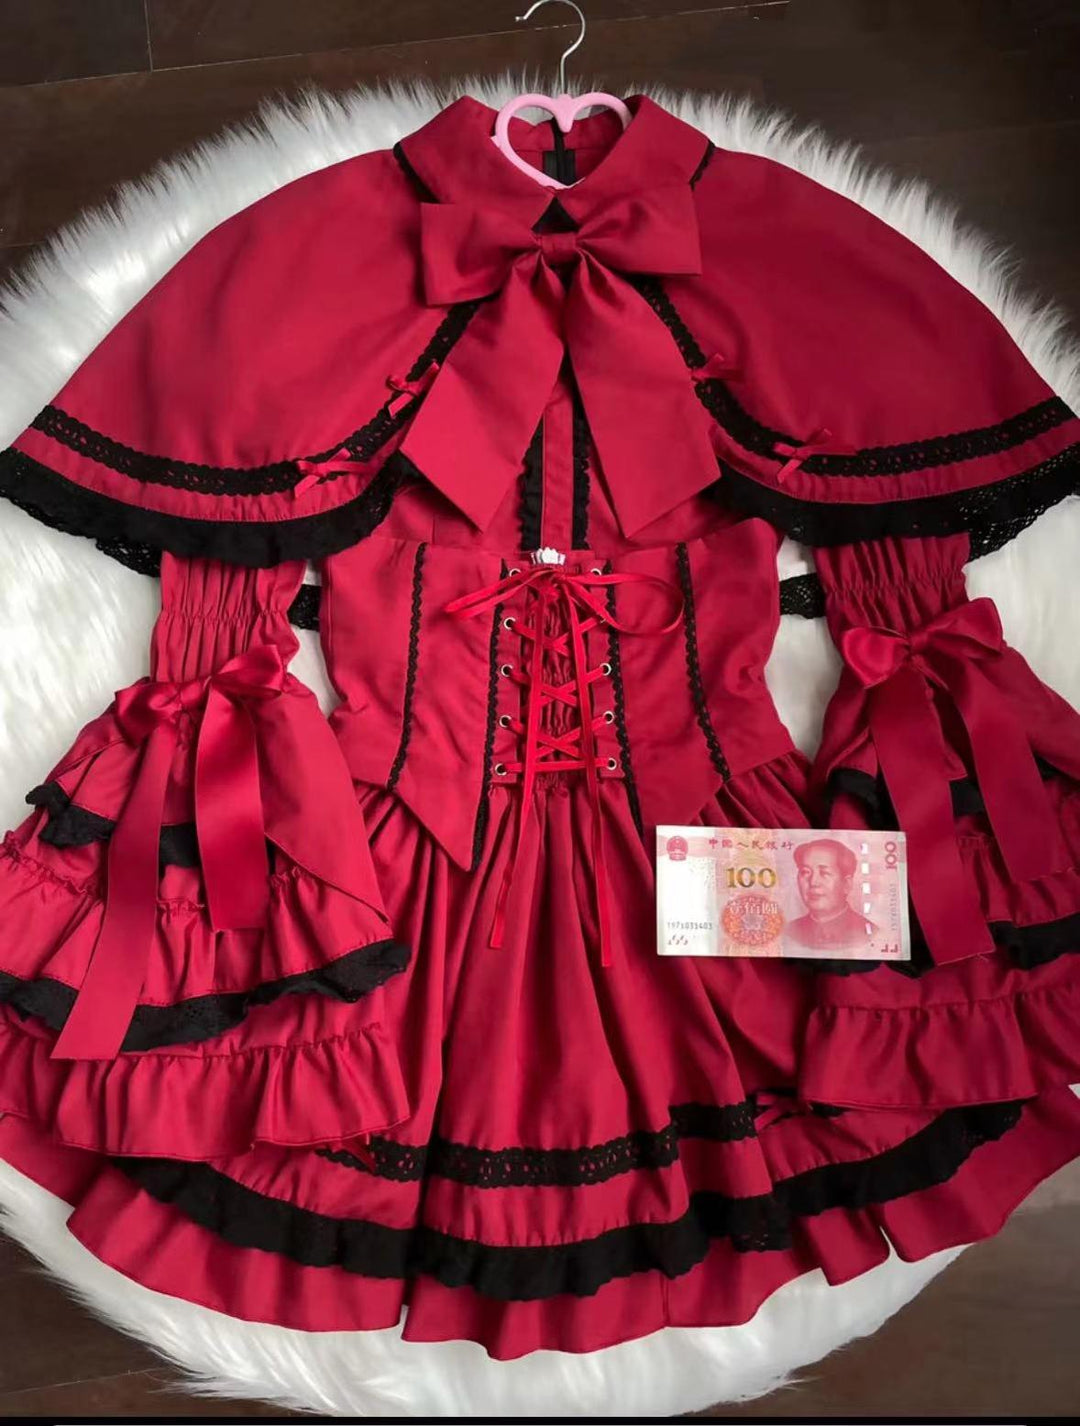 Mengfuzi~Doll Heart~Gorgeous Lolita Dress Vintage OP Cape Set S Red and black full set 